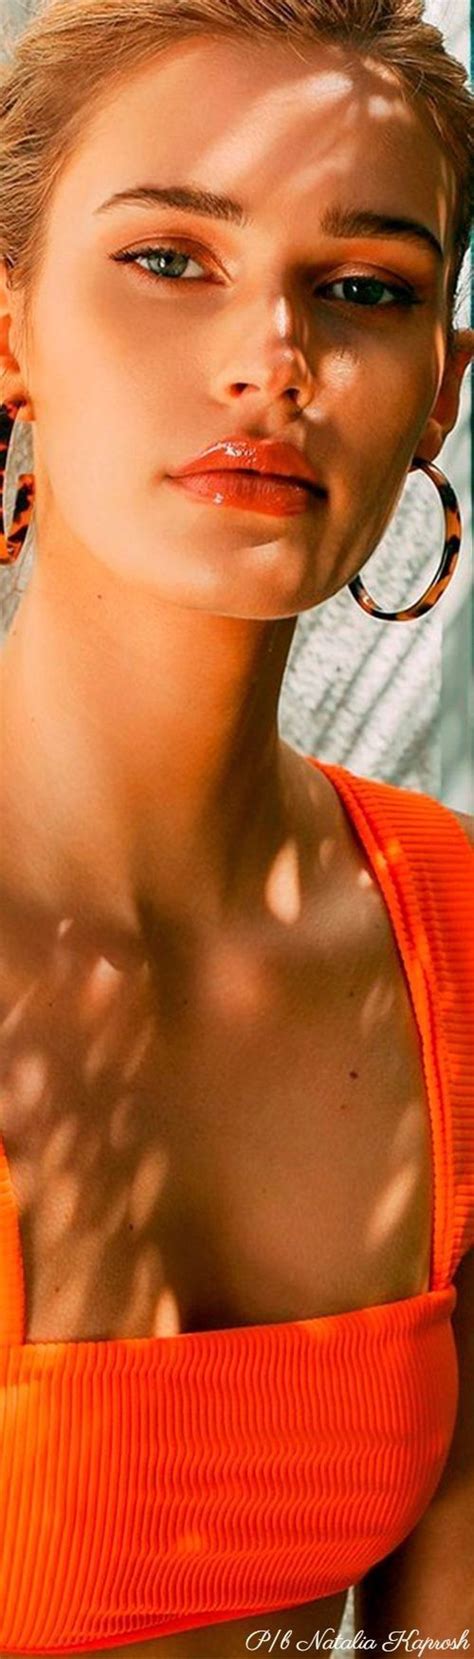 Pin by queen zone on Beautiful lips | Orange fashion, Shades of orange, Beautiful lips